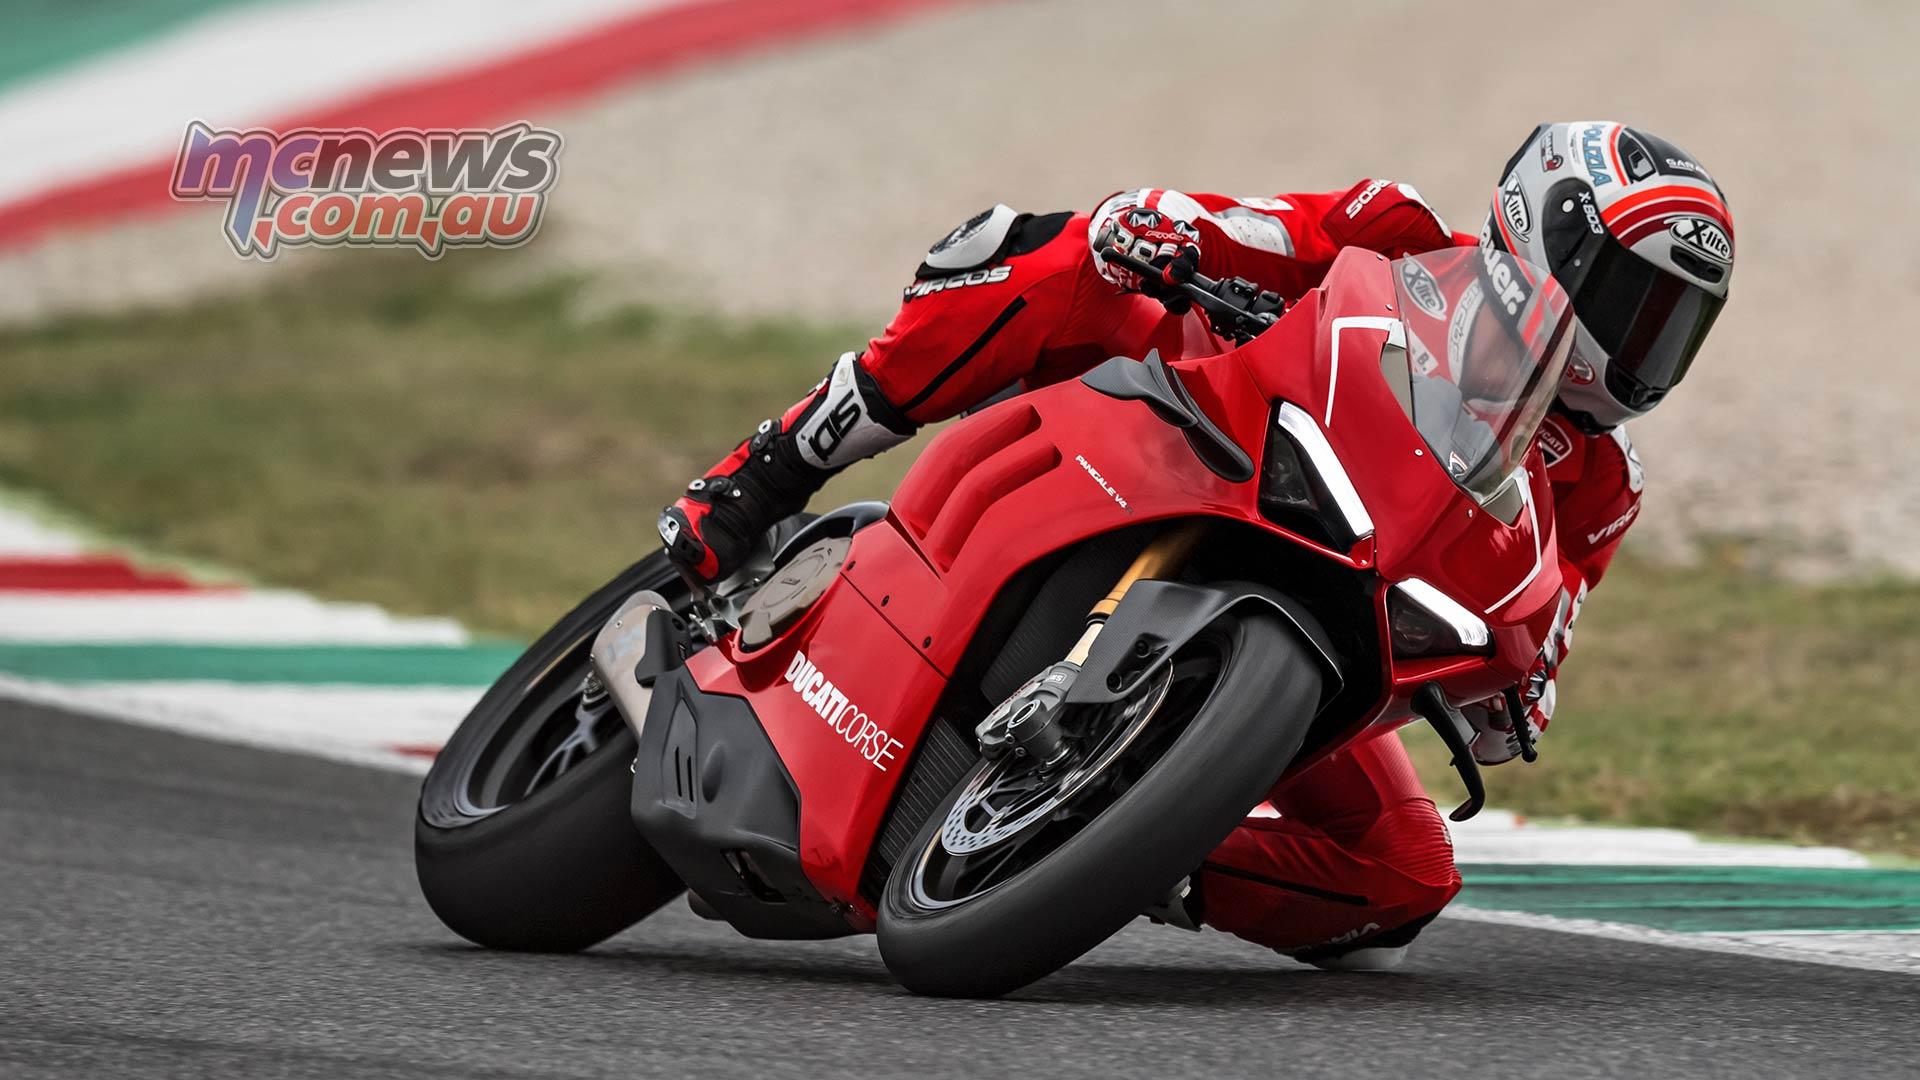 Ducati Panigale V4 Rcc racer. More tech details